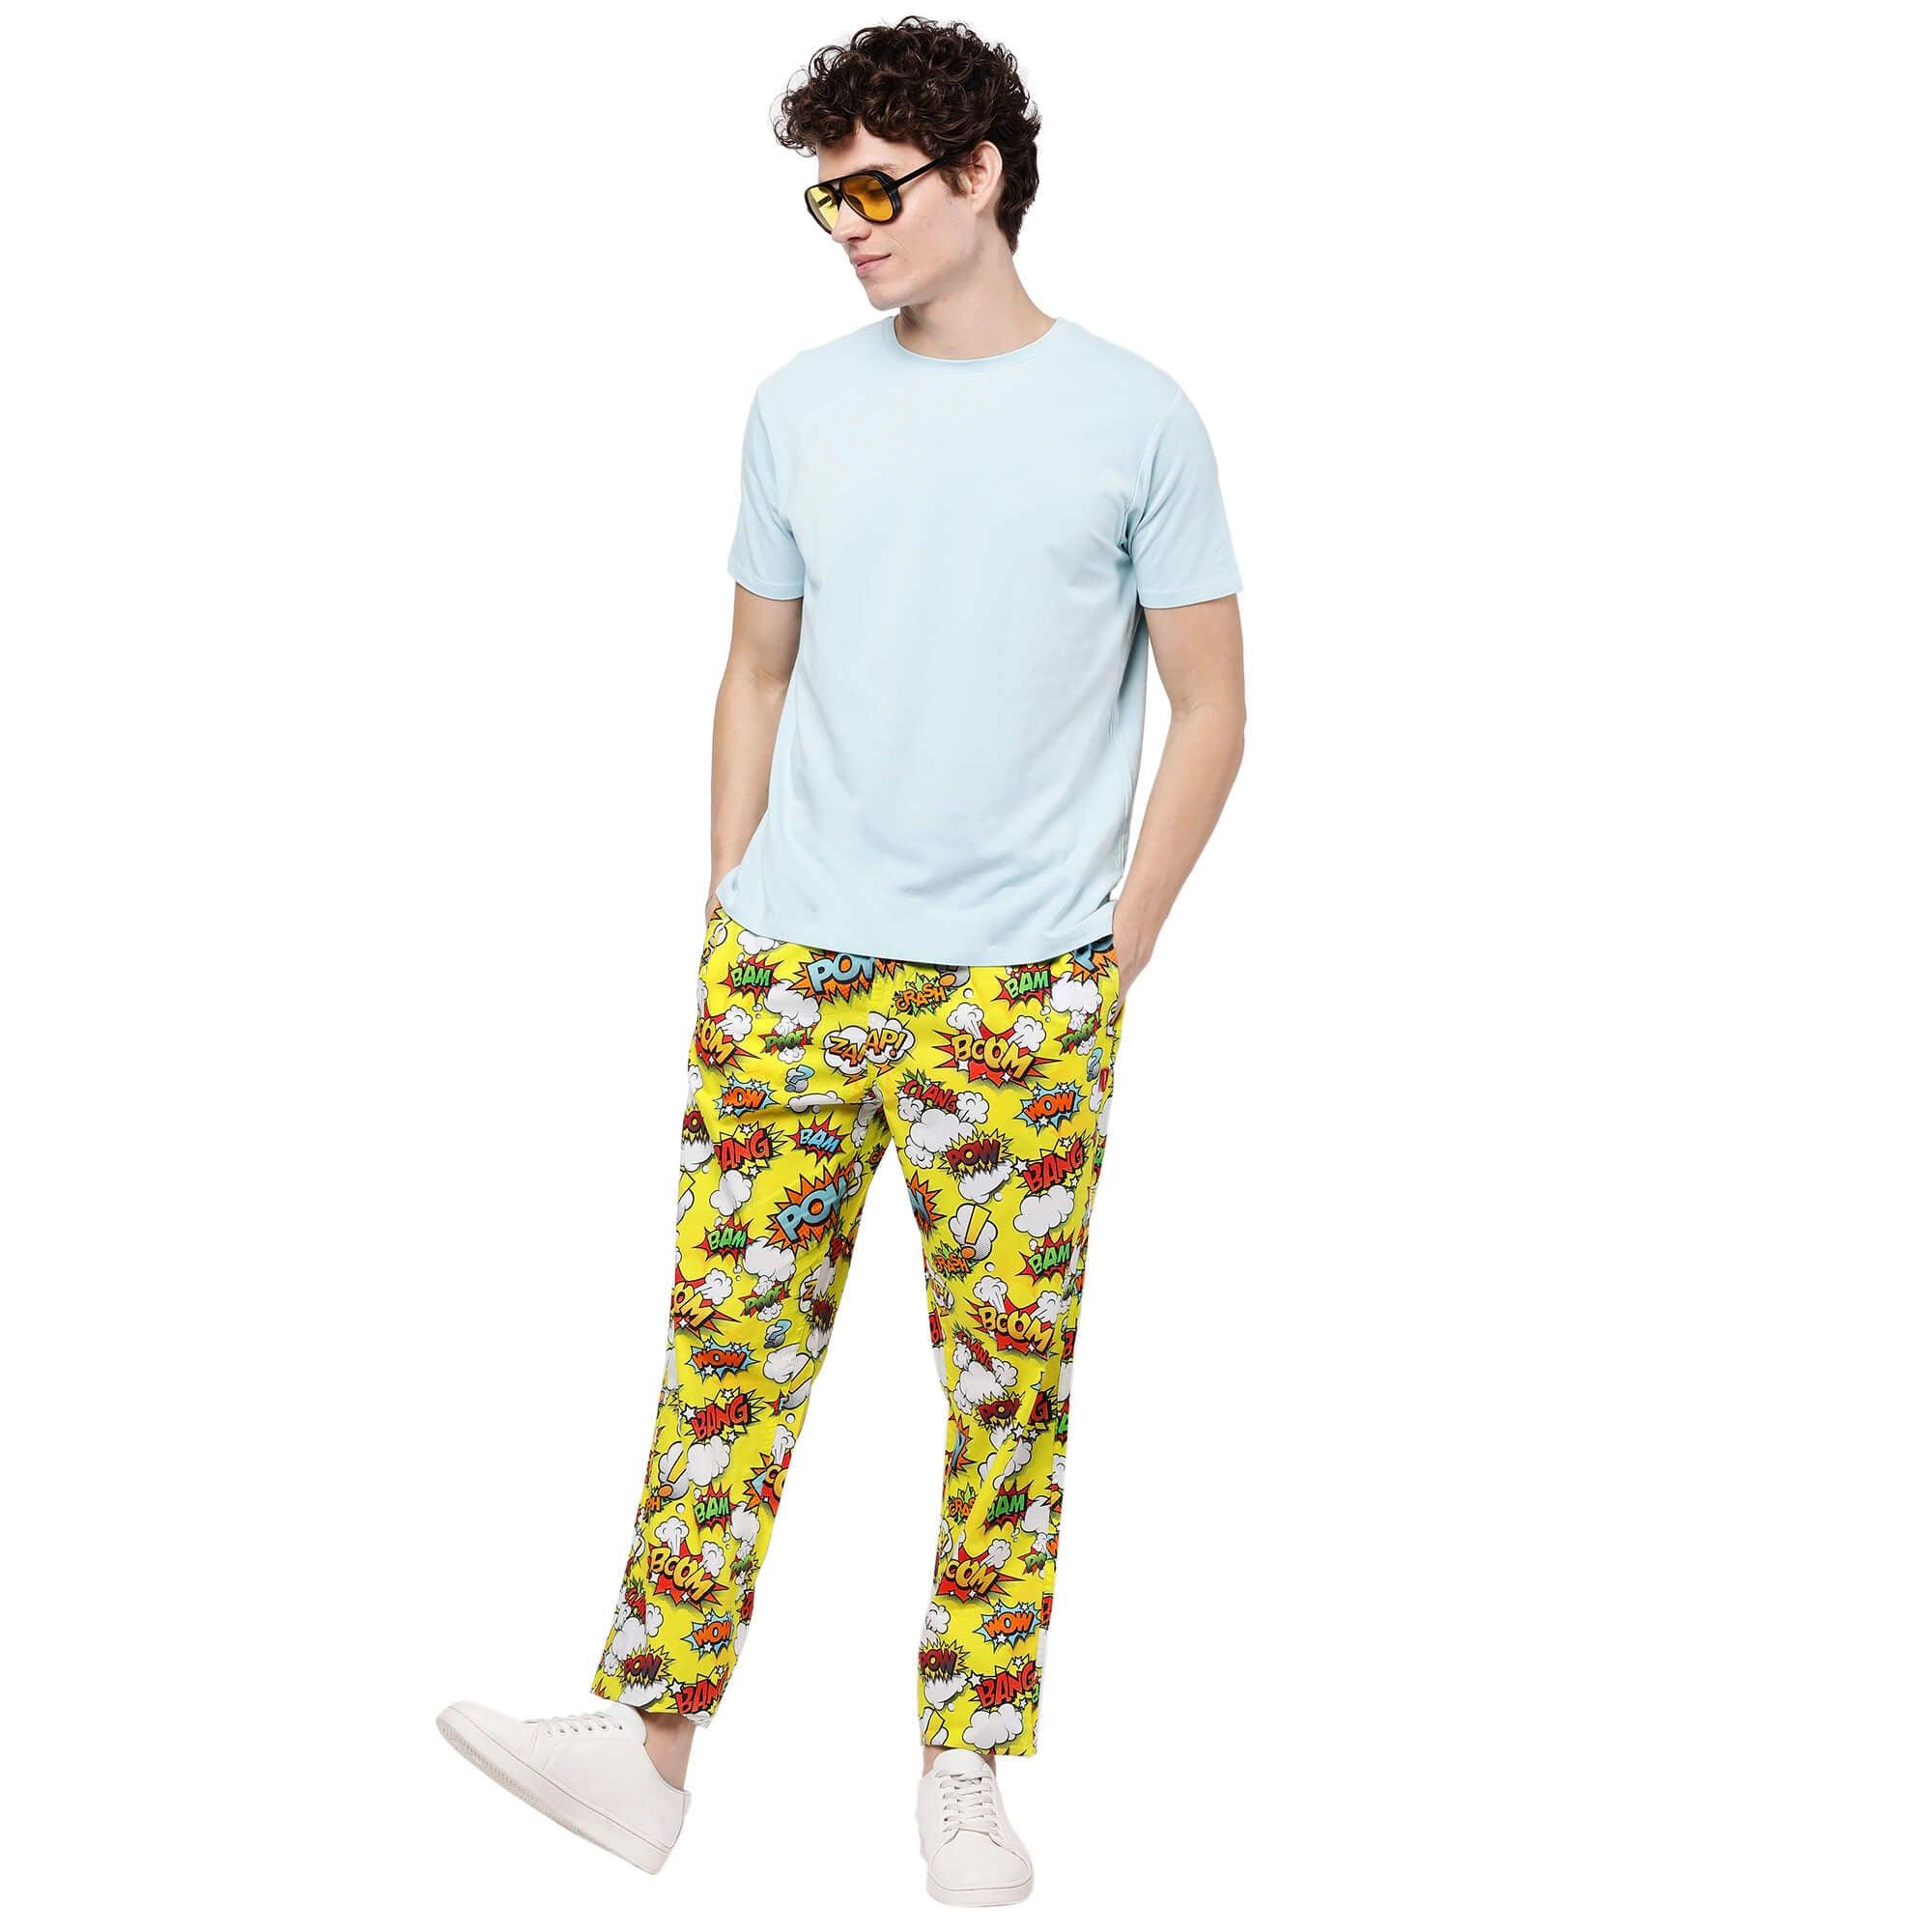 Comic Pow Printed Pyjamas for Men